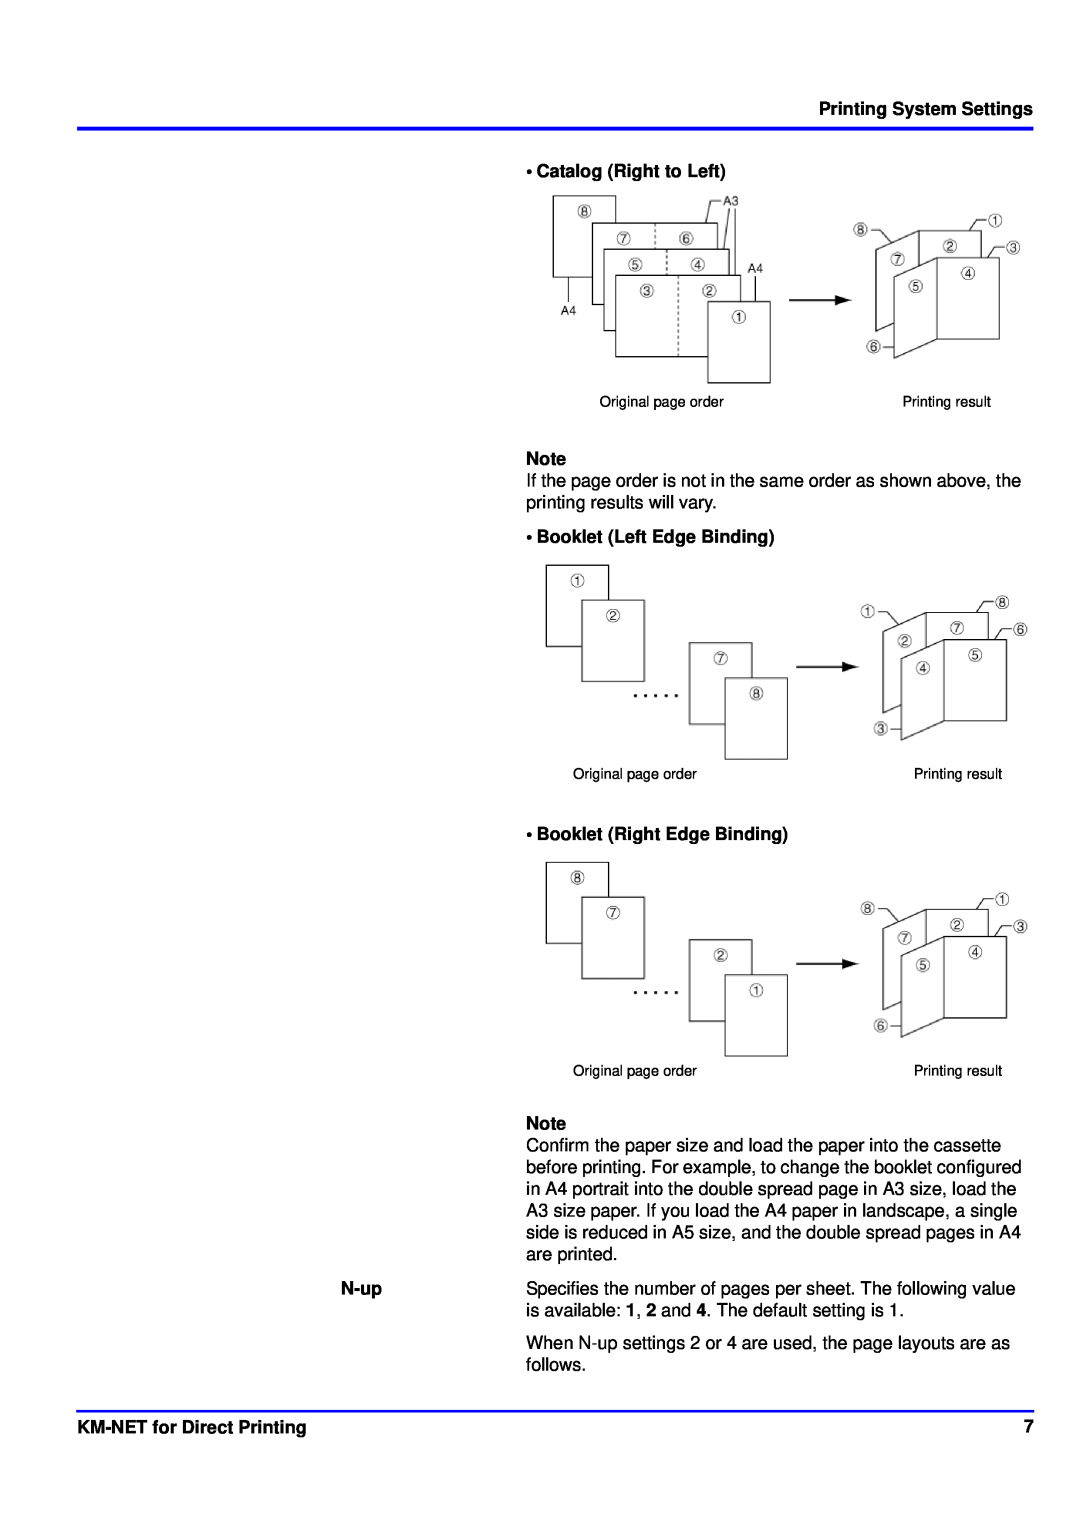 Kyocera KM-NET Printing System Settings Catalog Right to Left, Booklet Left Edge Binding, Booklet Right Edge Binding, N-up 